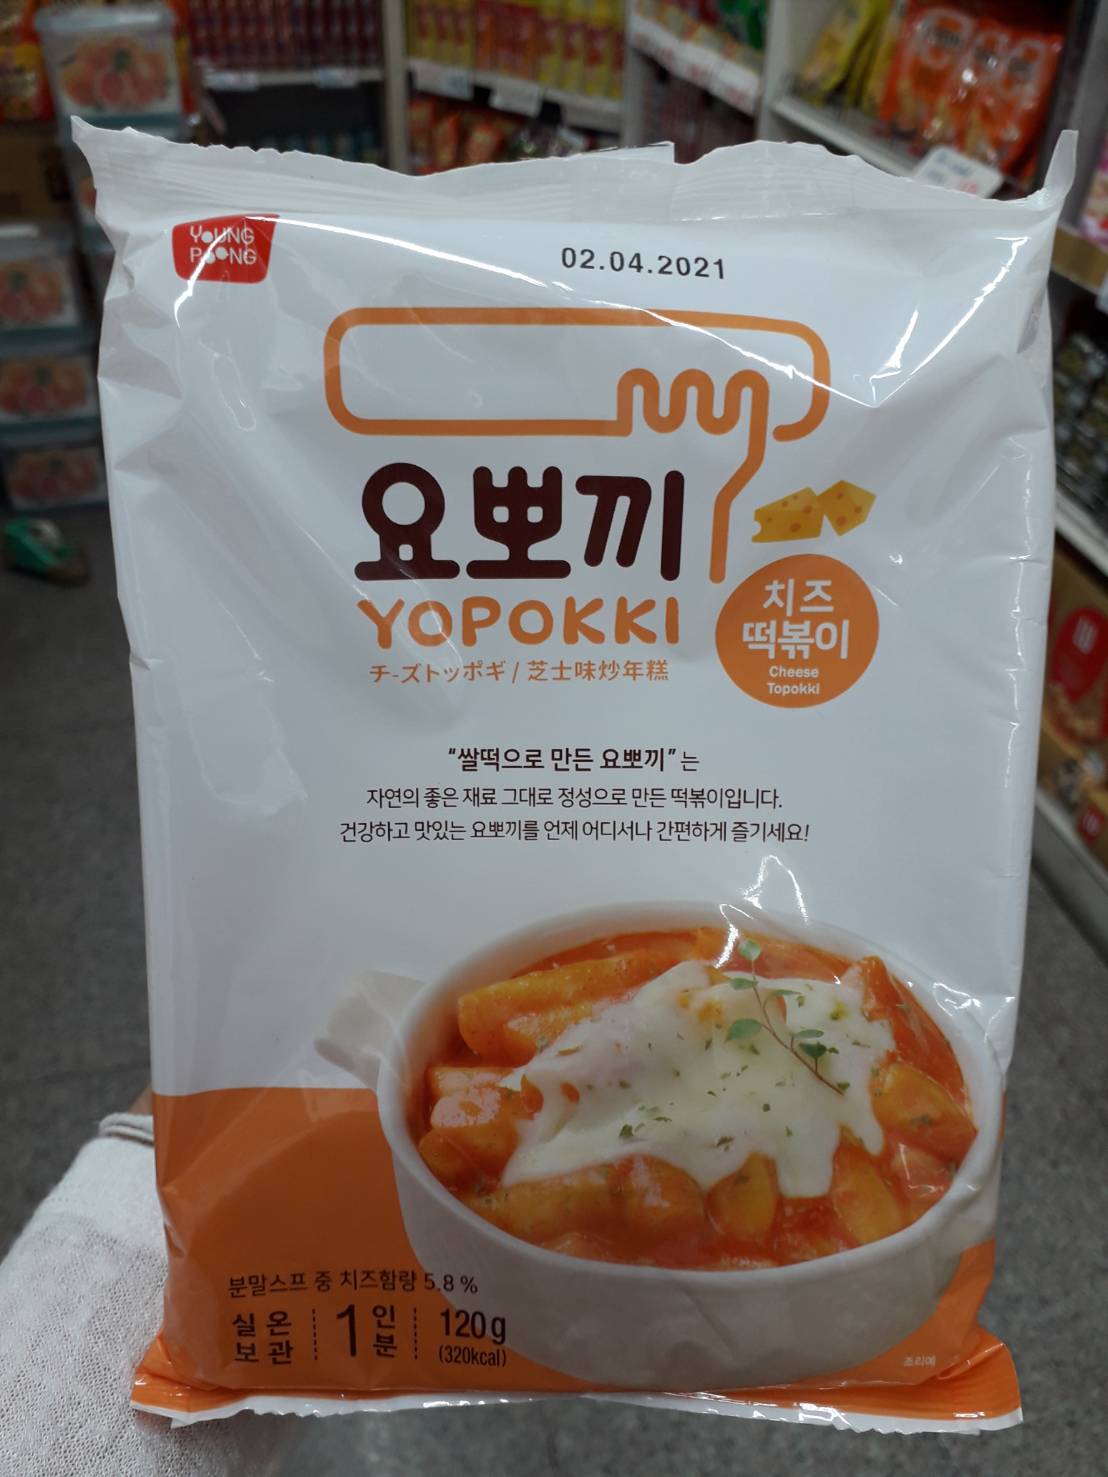 Yopokki Cheese Topokki (for one)Tteokbokki Pack โยป๊อกกิ ชีส ต๊อกป๊อกกิผัดซอสผสมชีส นำเข้าจากเกาหลี 120g